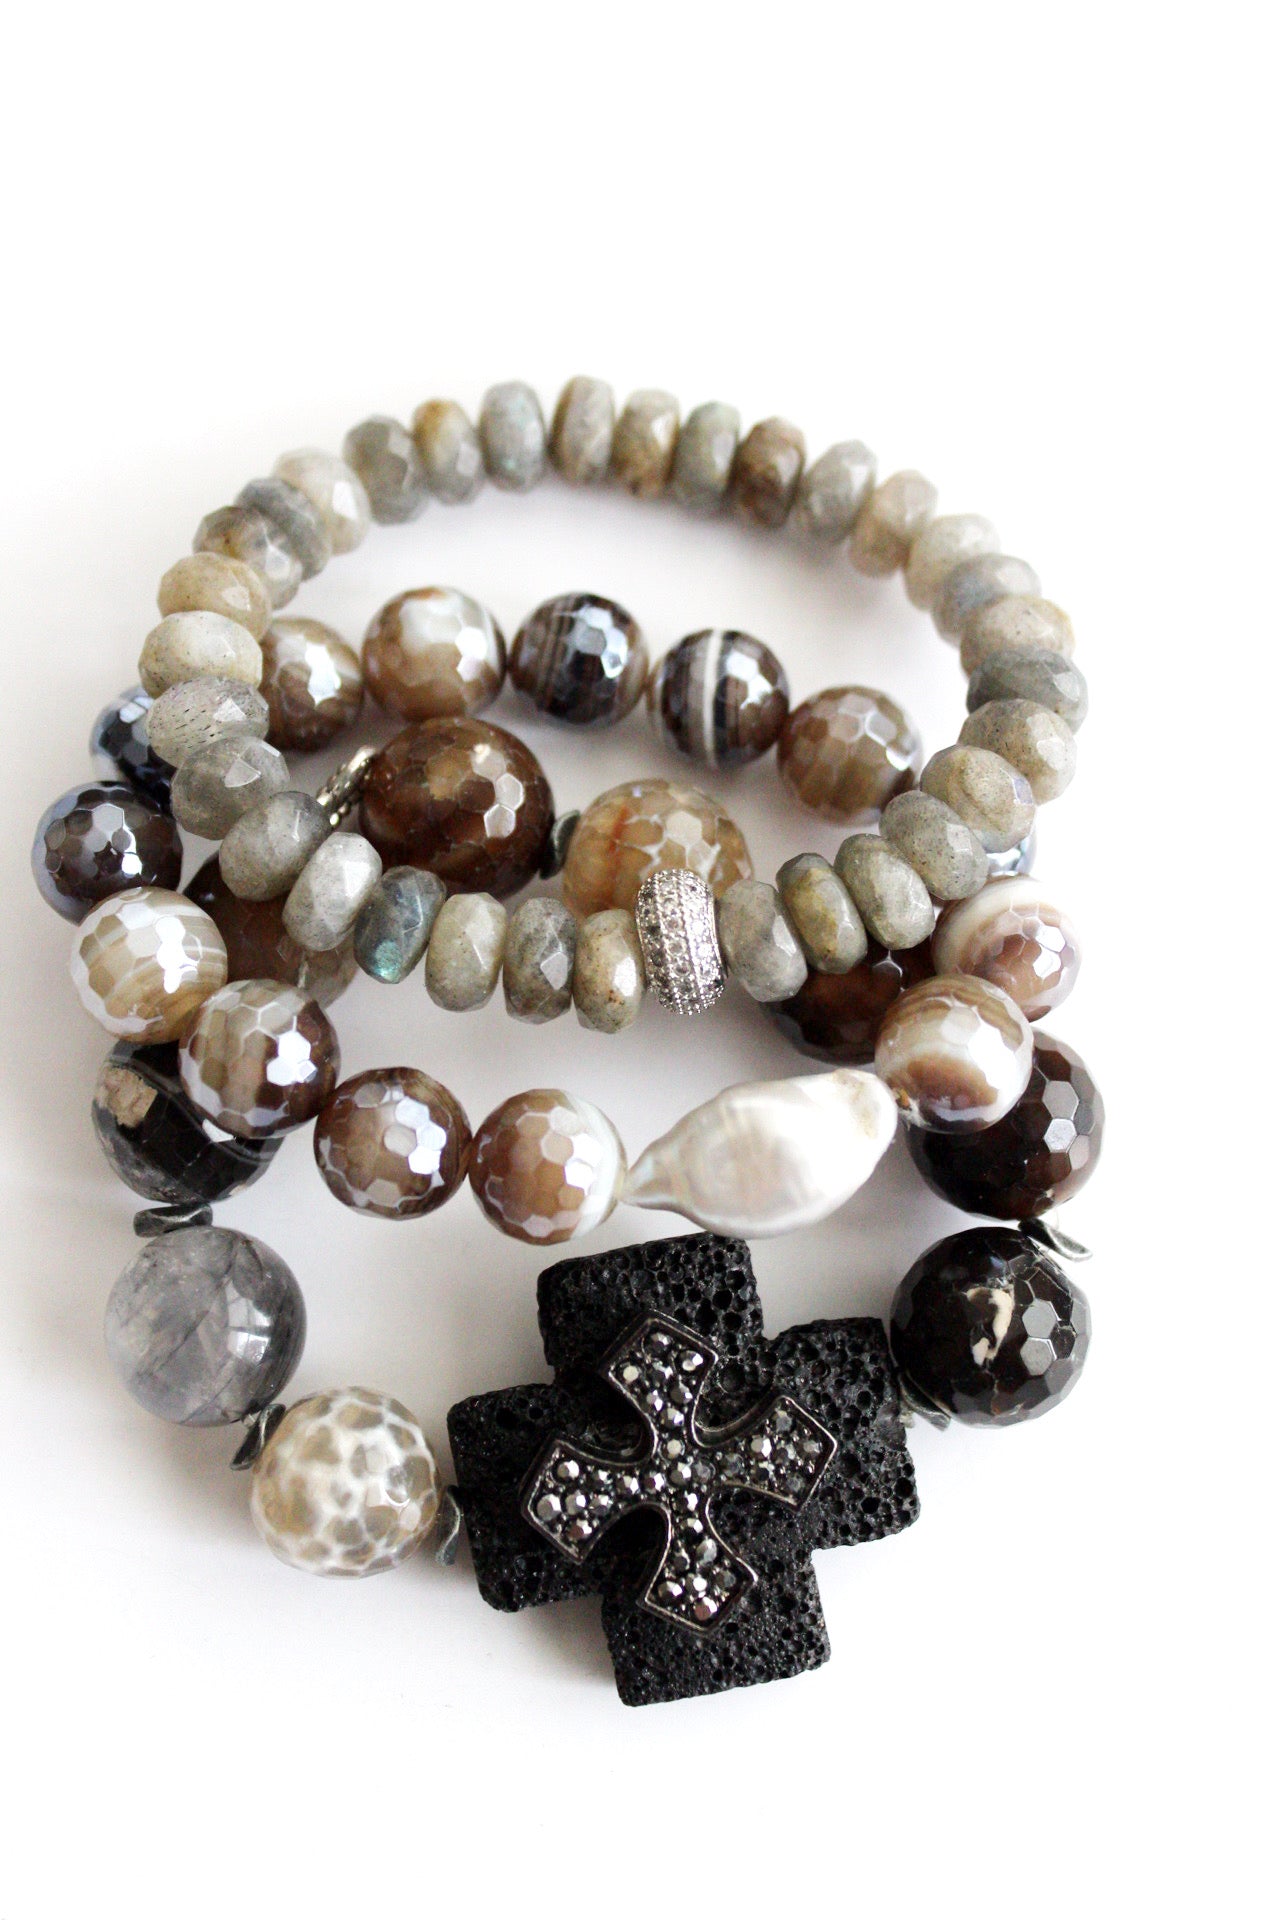 Lava beads bracelet, agate bracelet, pearl bracelet, stack bracelet, Michael Gabriel Designs